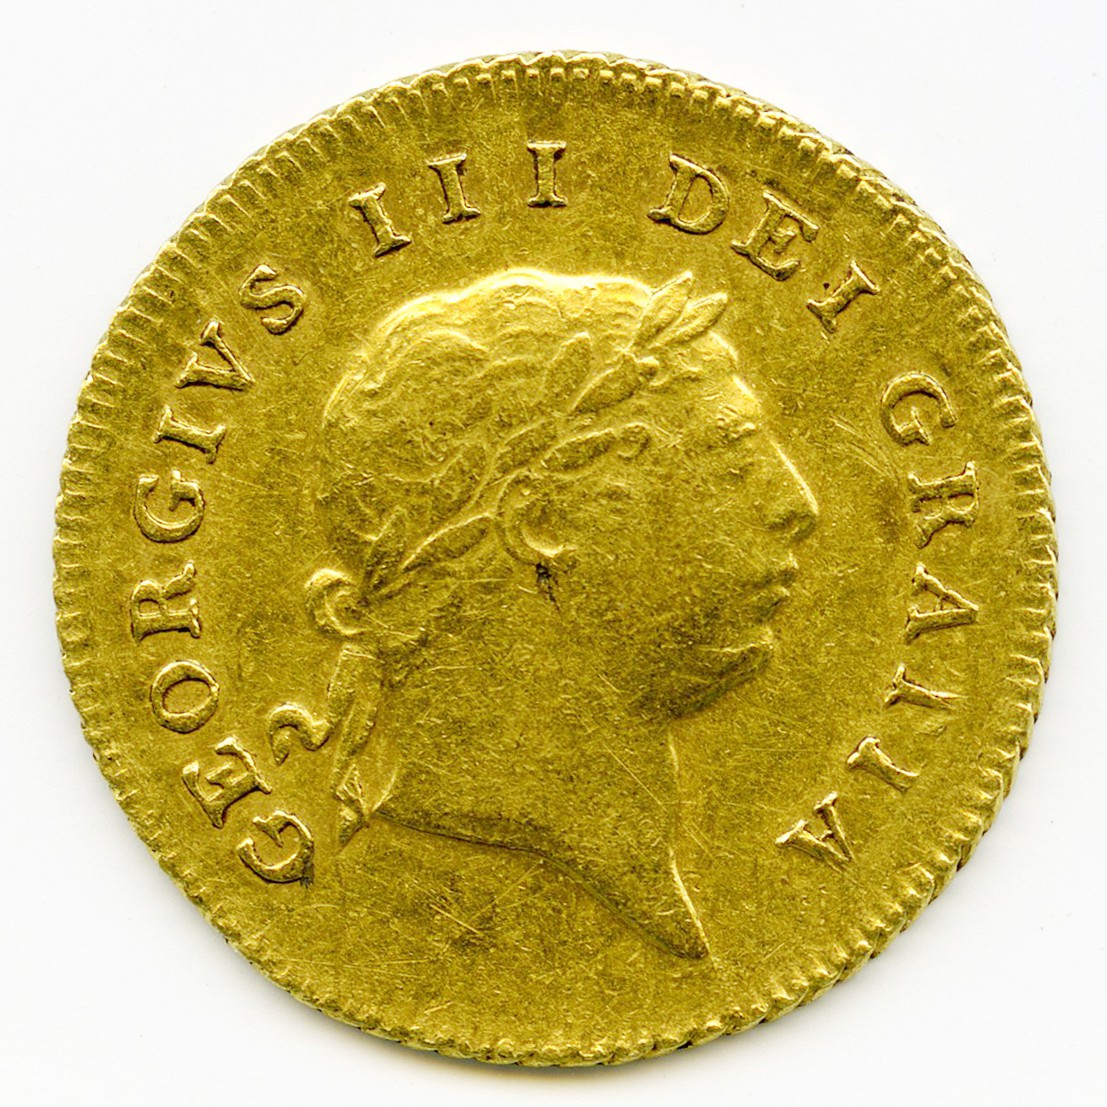 Grande-Bretagne - 1/2 Guinea - 1810 avers